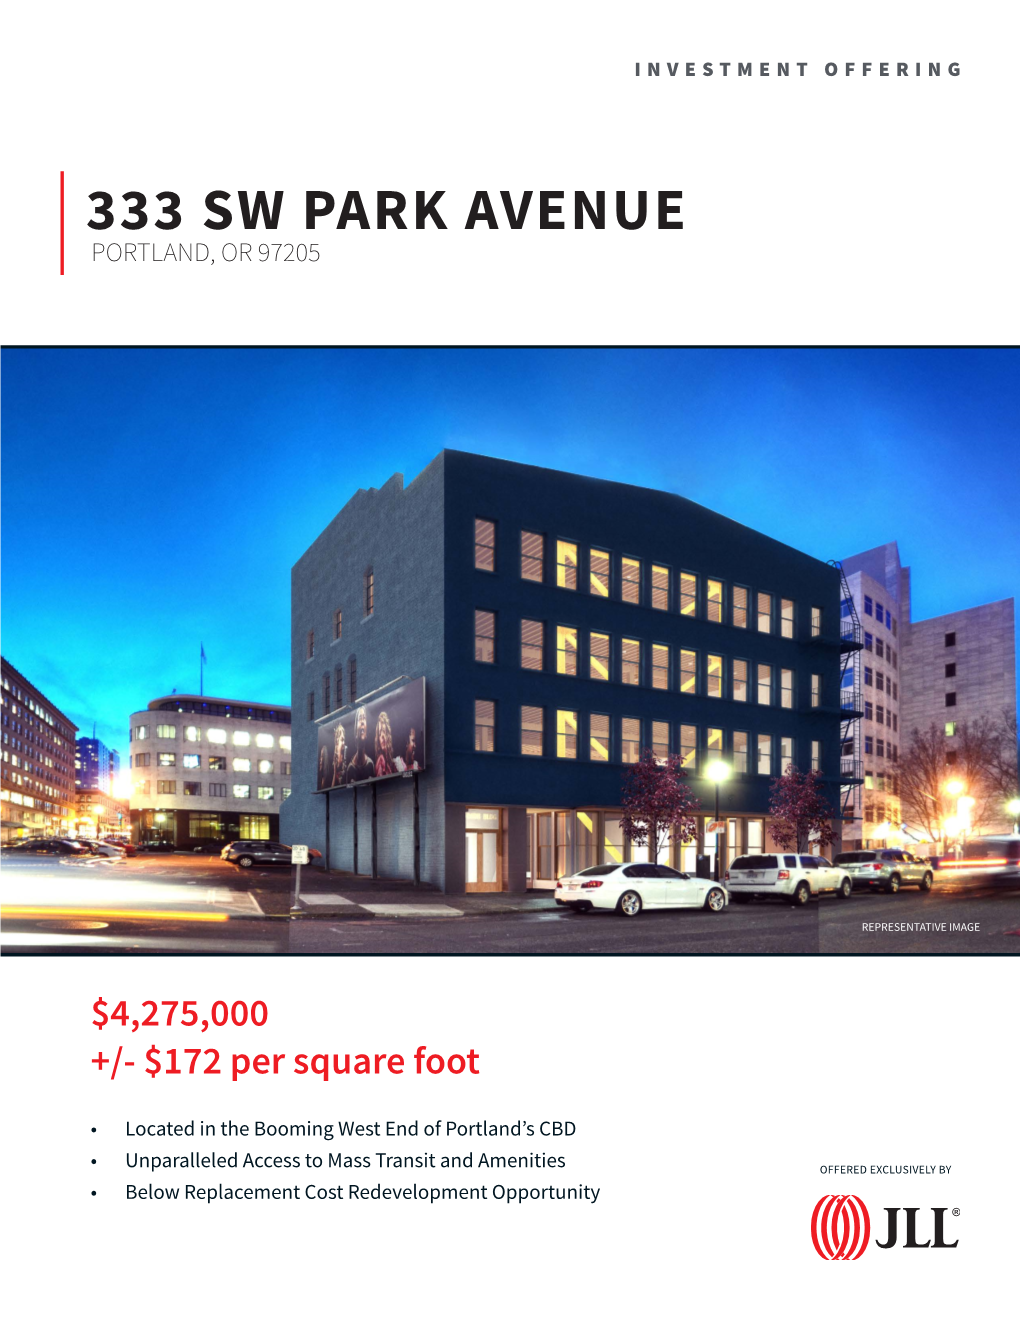 333 Sw Park Avenue Portland, Or 97205